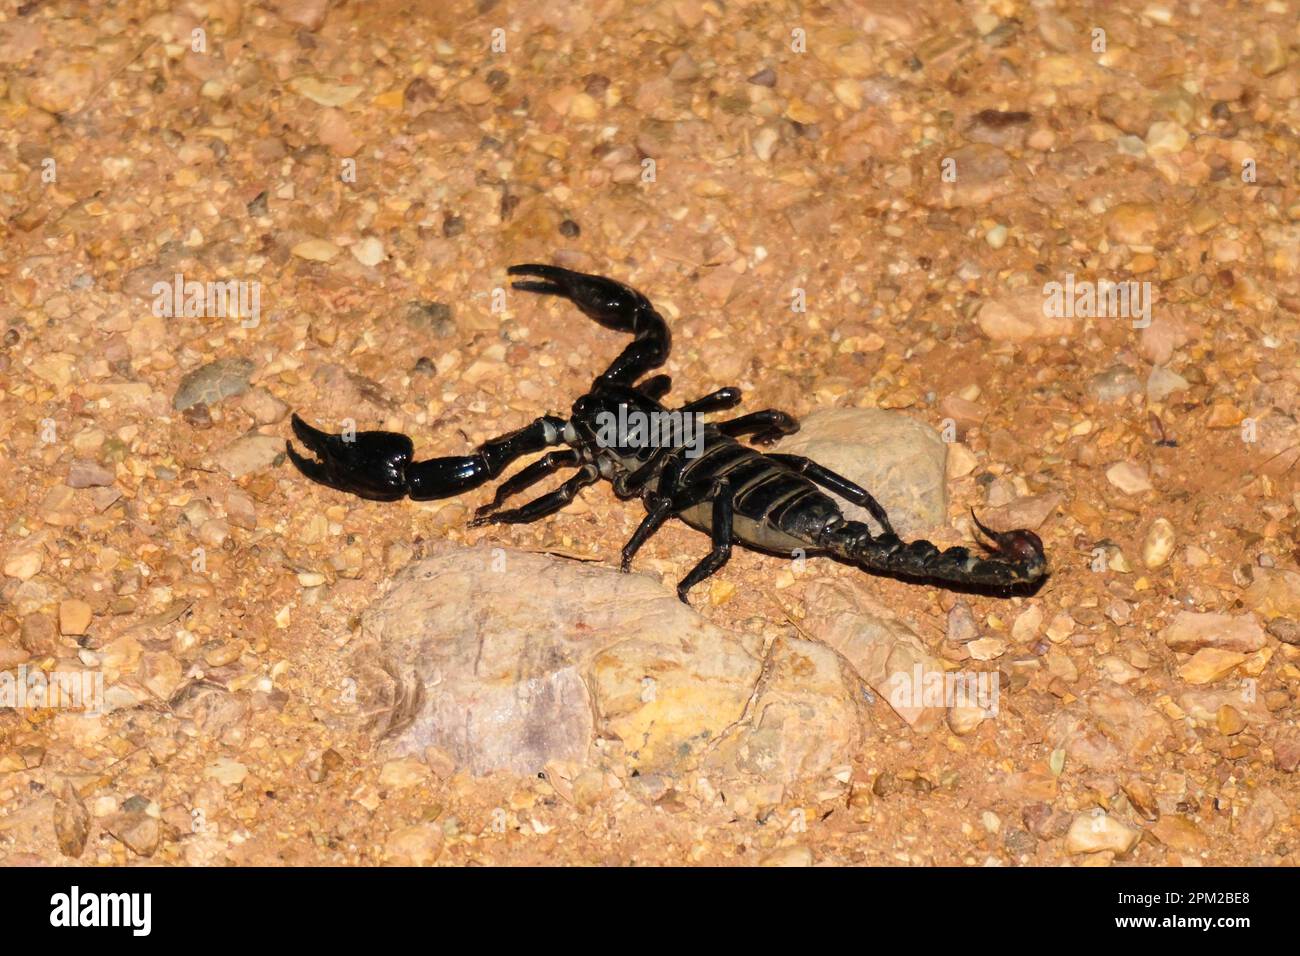 Black Forest Scorpion or heterometrus laoticus - An Intimidating Arachnid Species Caught on Camera Stock Photo